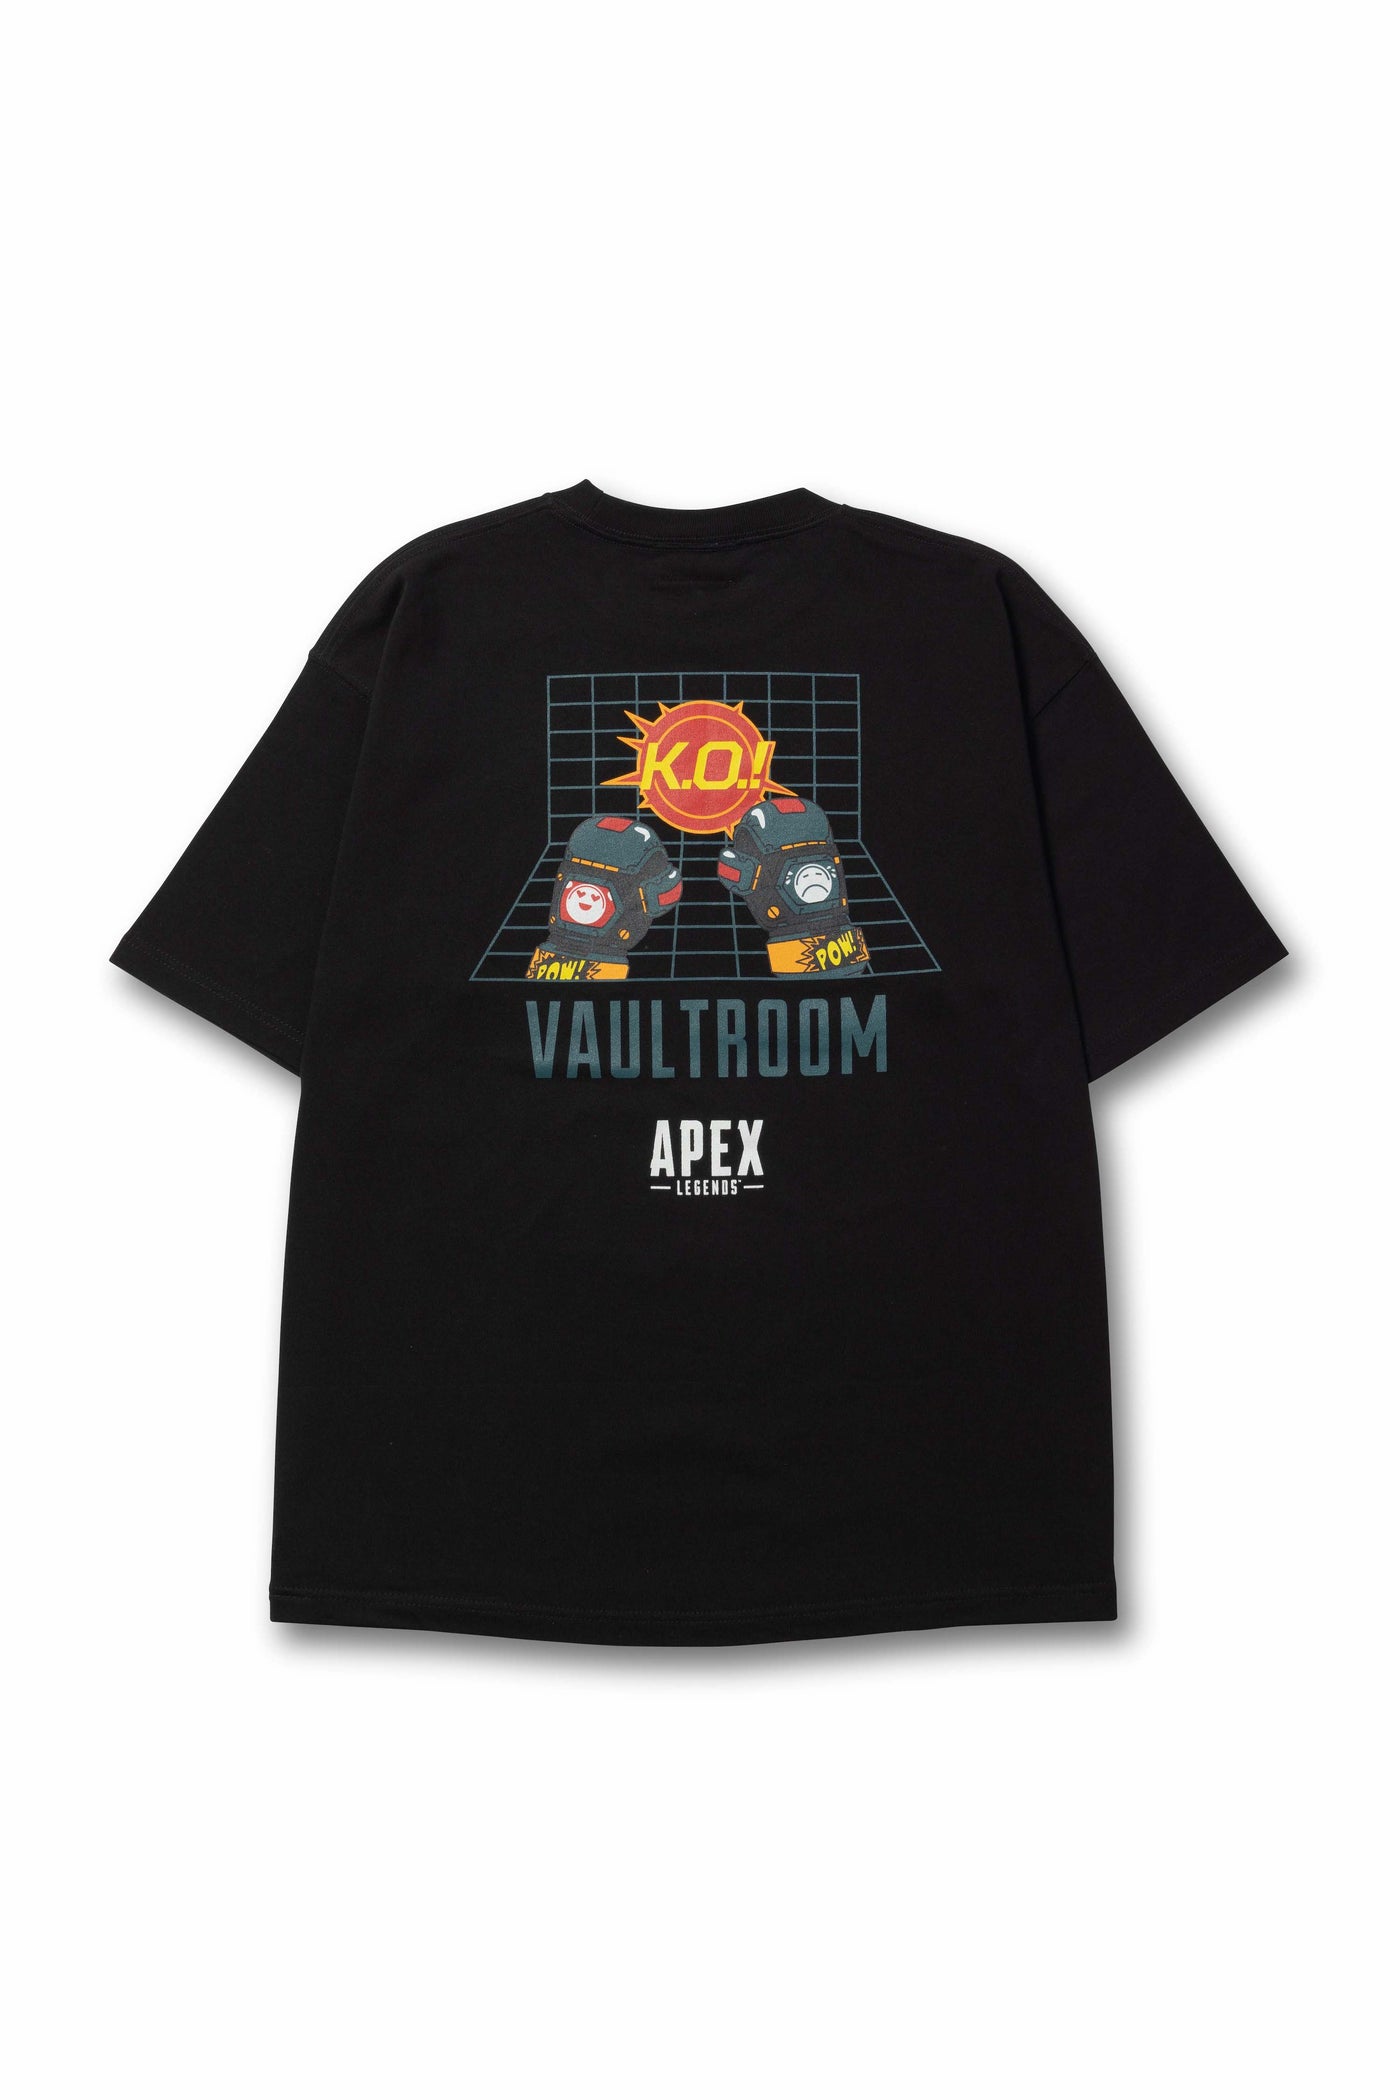 vaultroom パスファインダー APEX Tシャツ L-